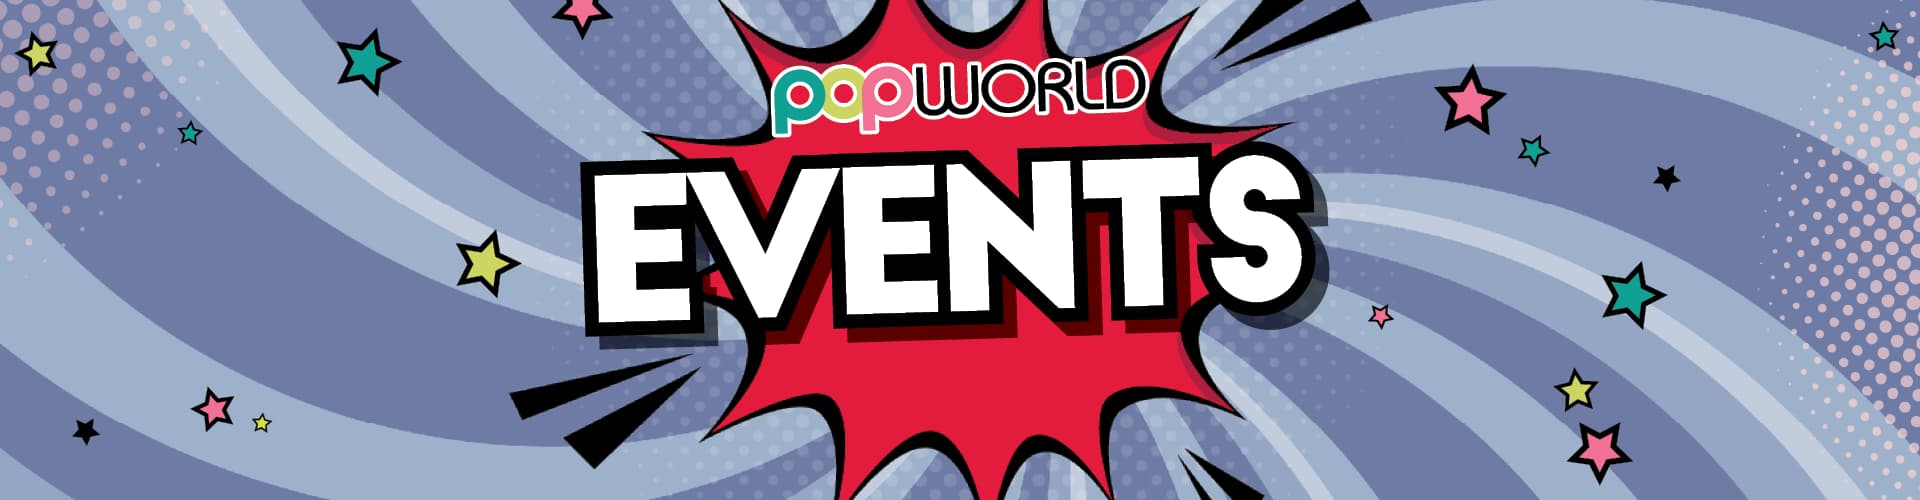 Events at Popworld Bristol